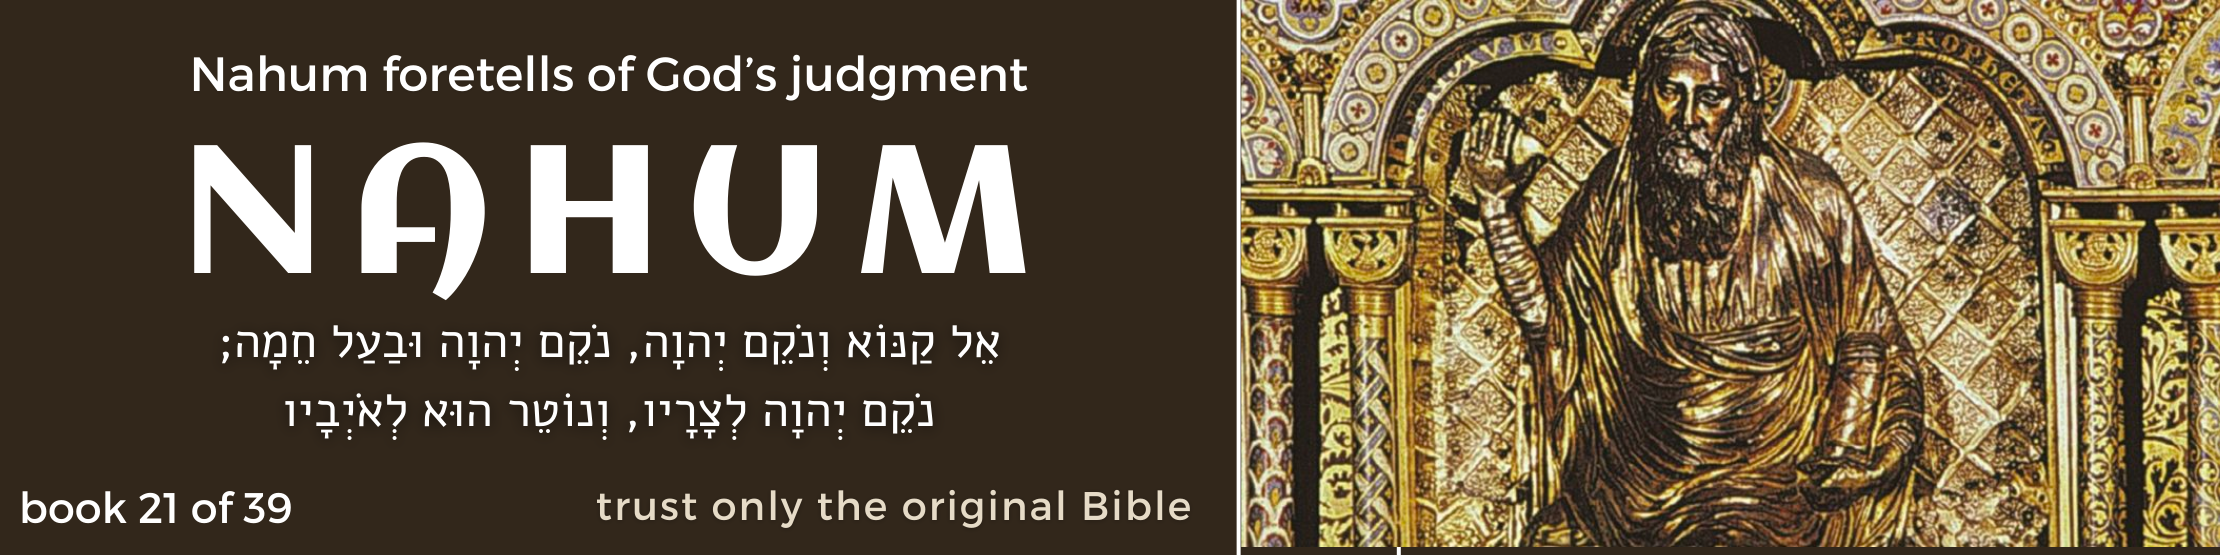 21 Nahum book - original bible - banner